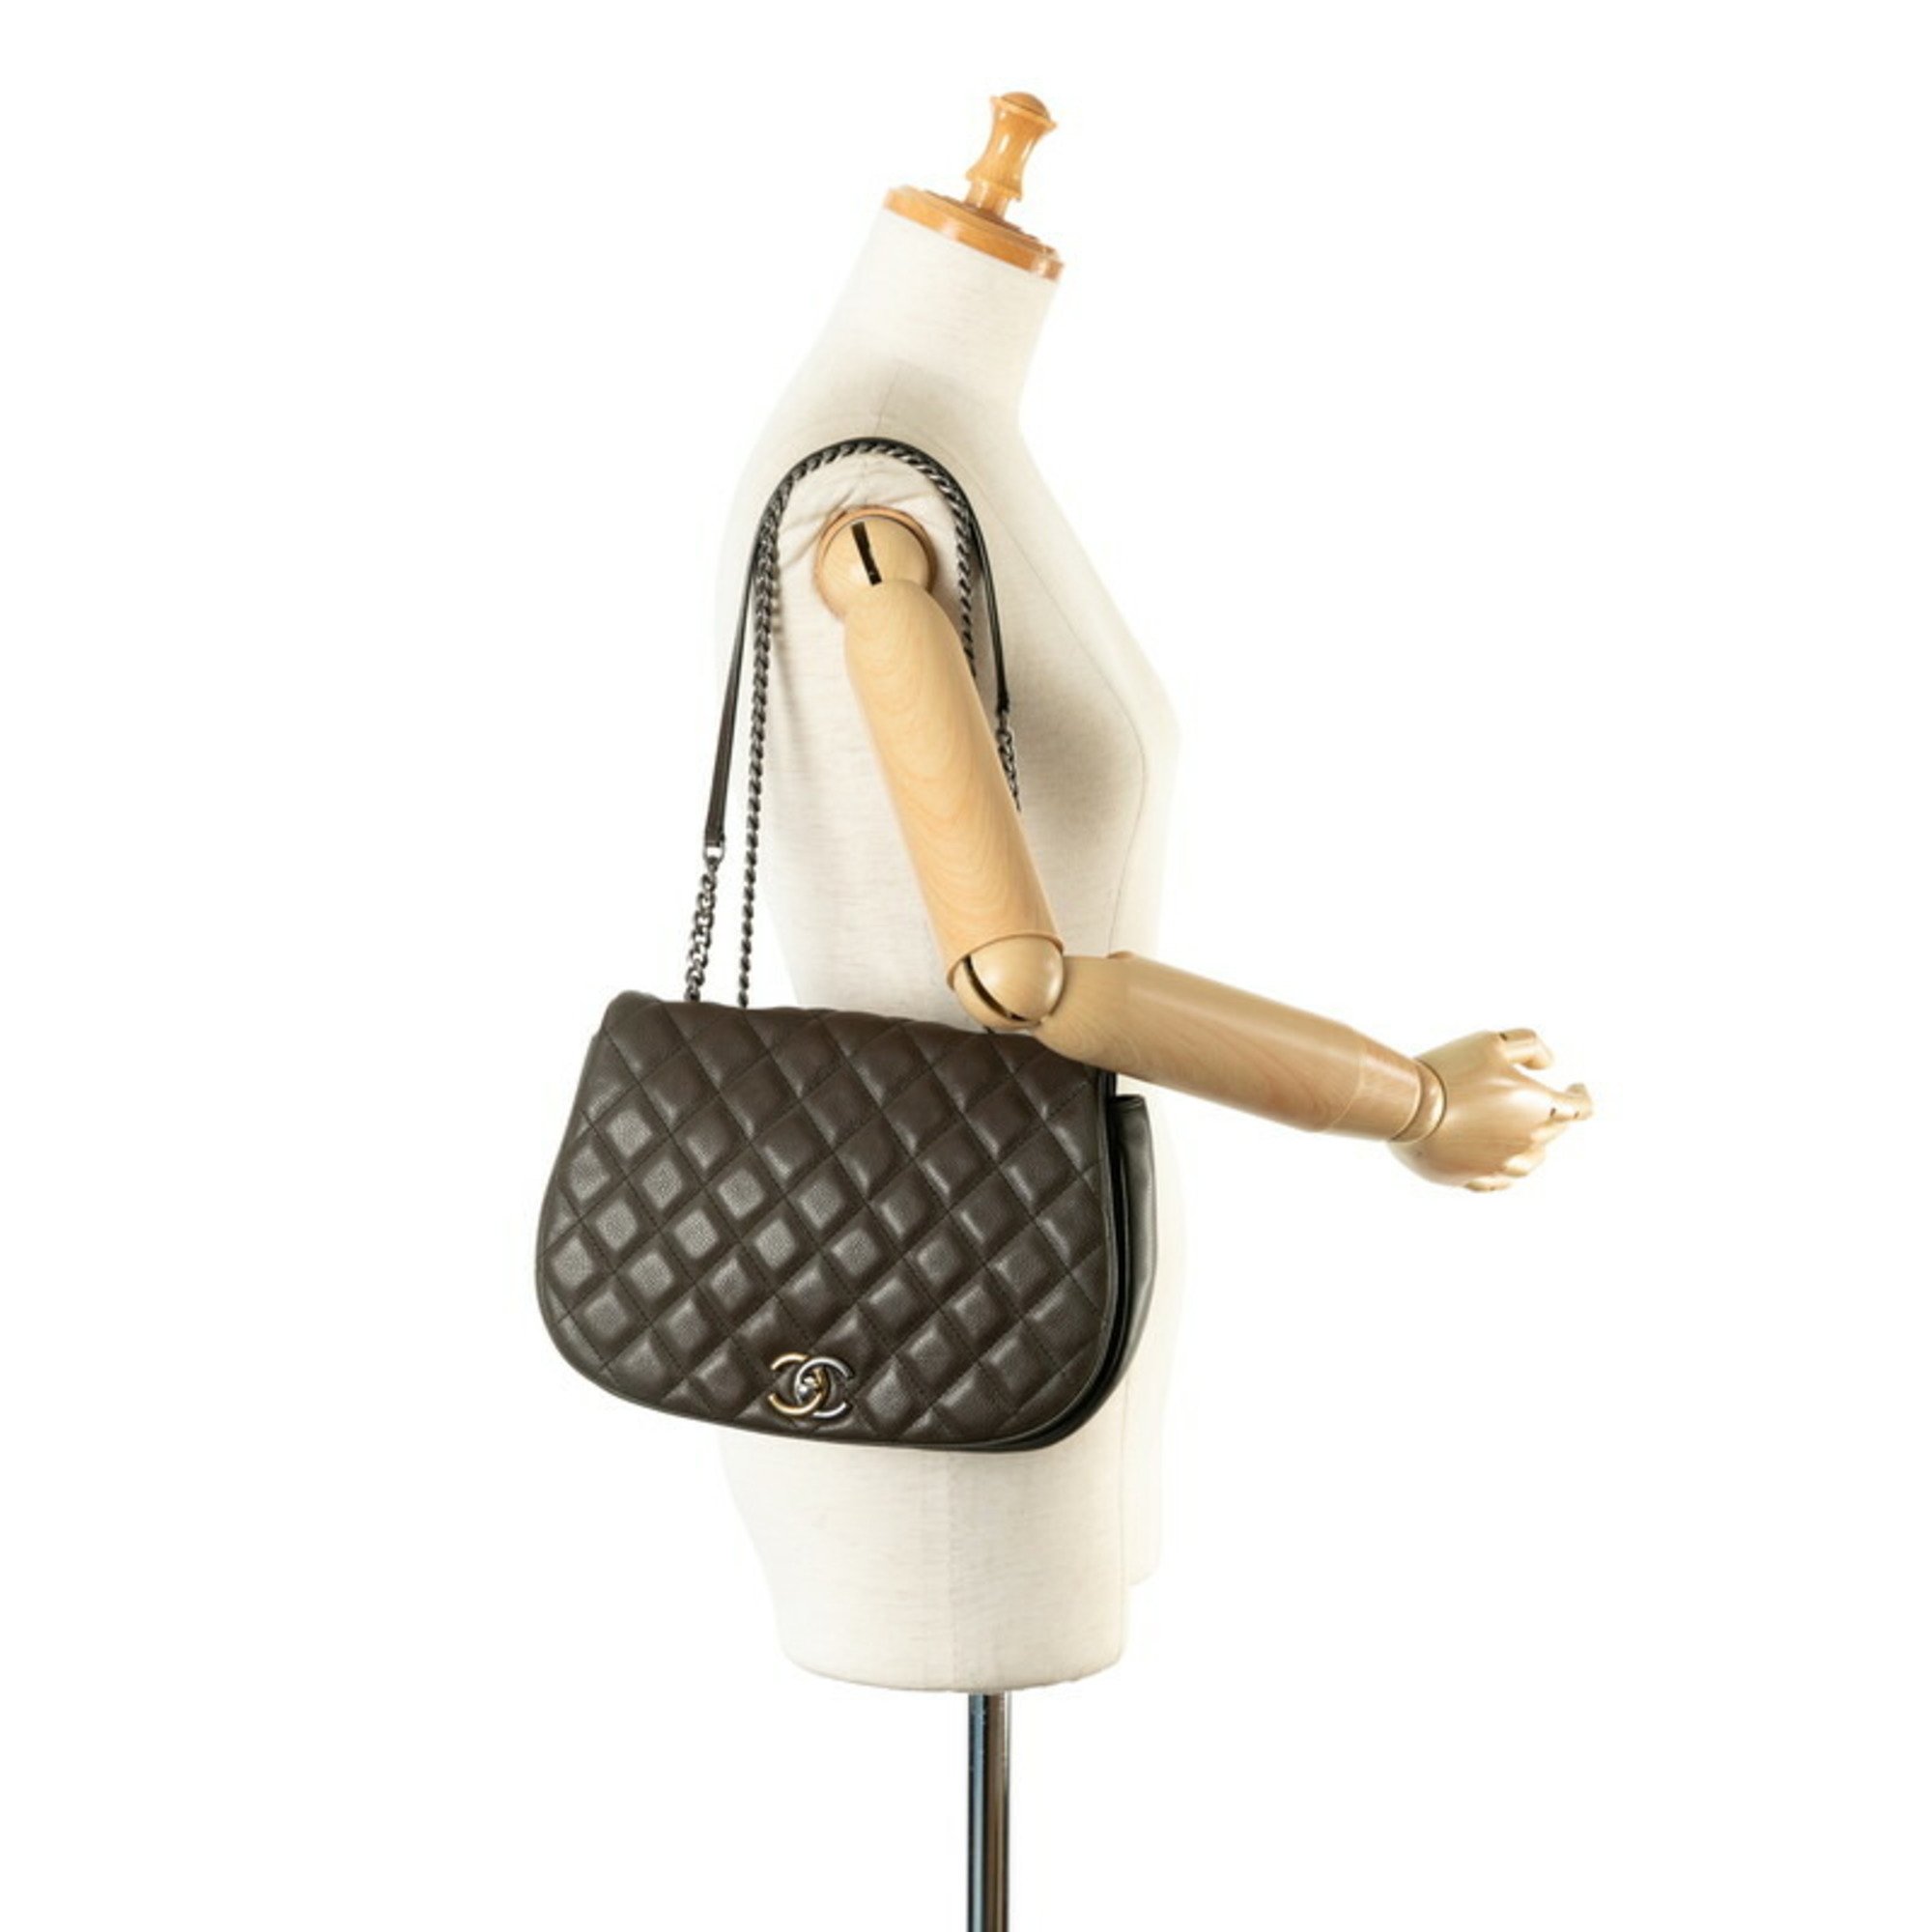 Chanel Matelasse Chain Shoulder Bag Khaki Grey Caviar Skin Women's CHANEL